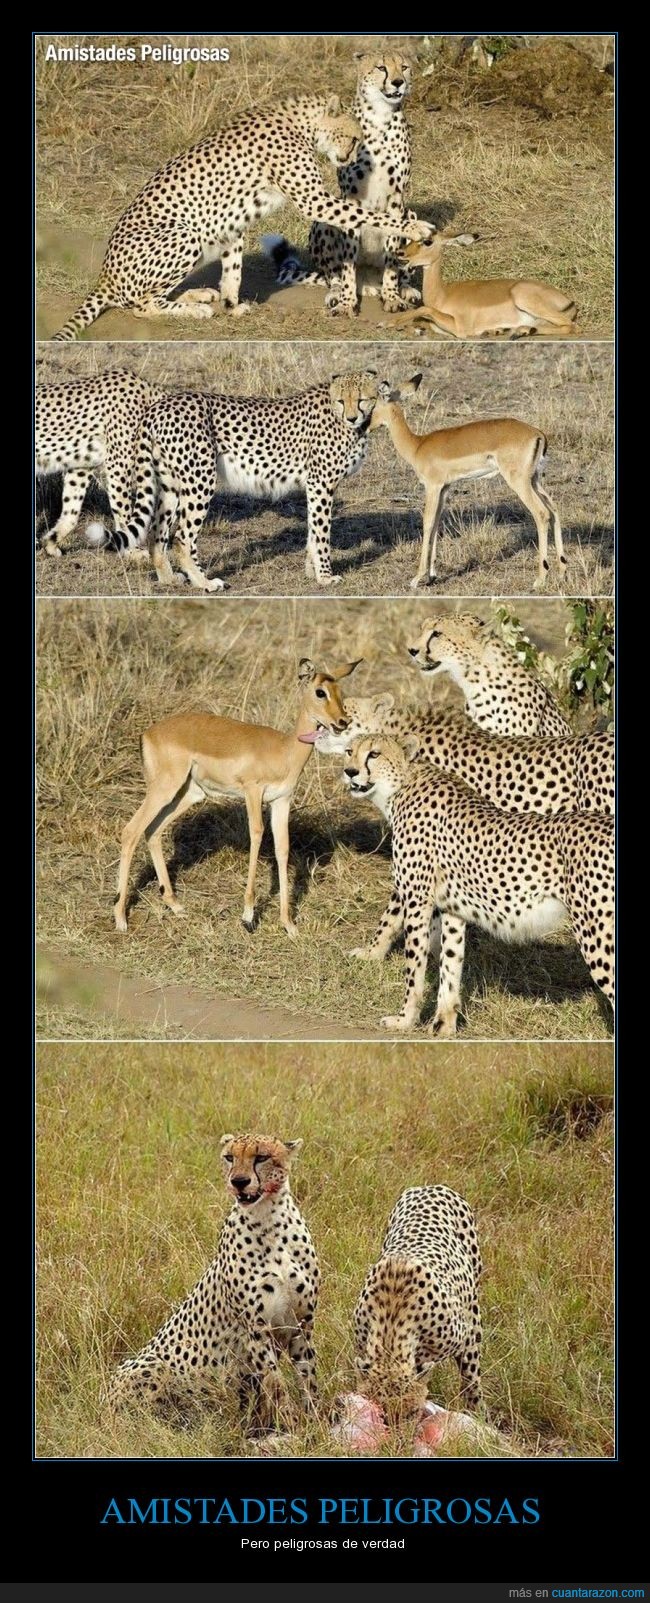 amistad,peligrosa,leopardo,guepardo,gacela,jugar,comer,comida